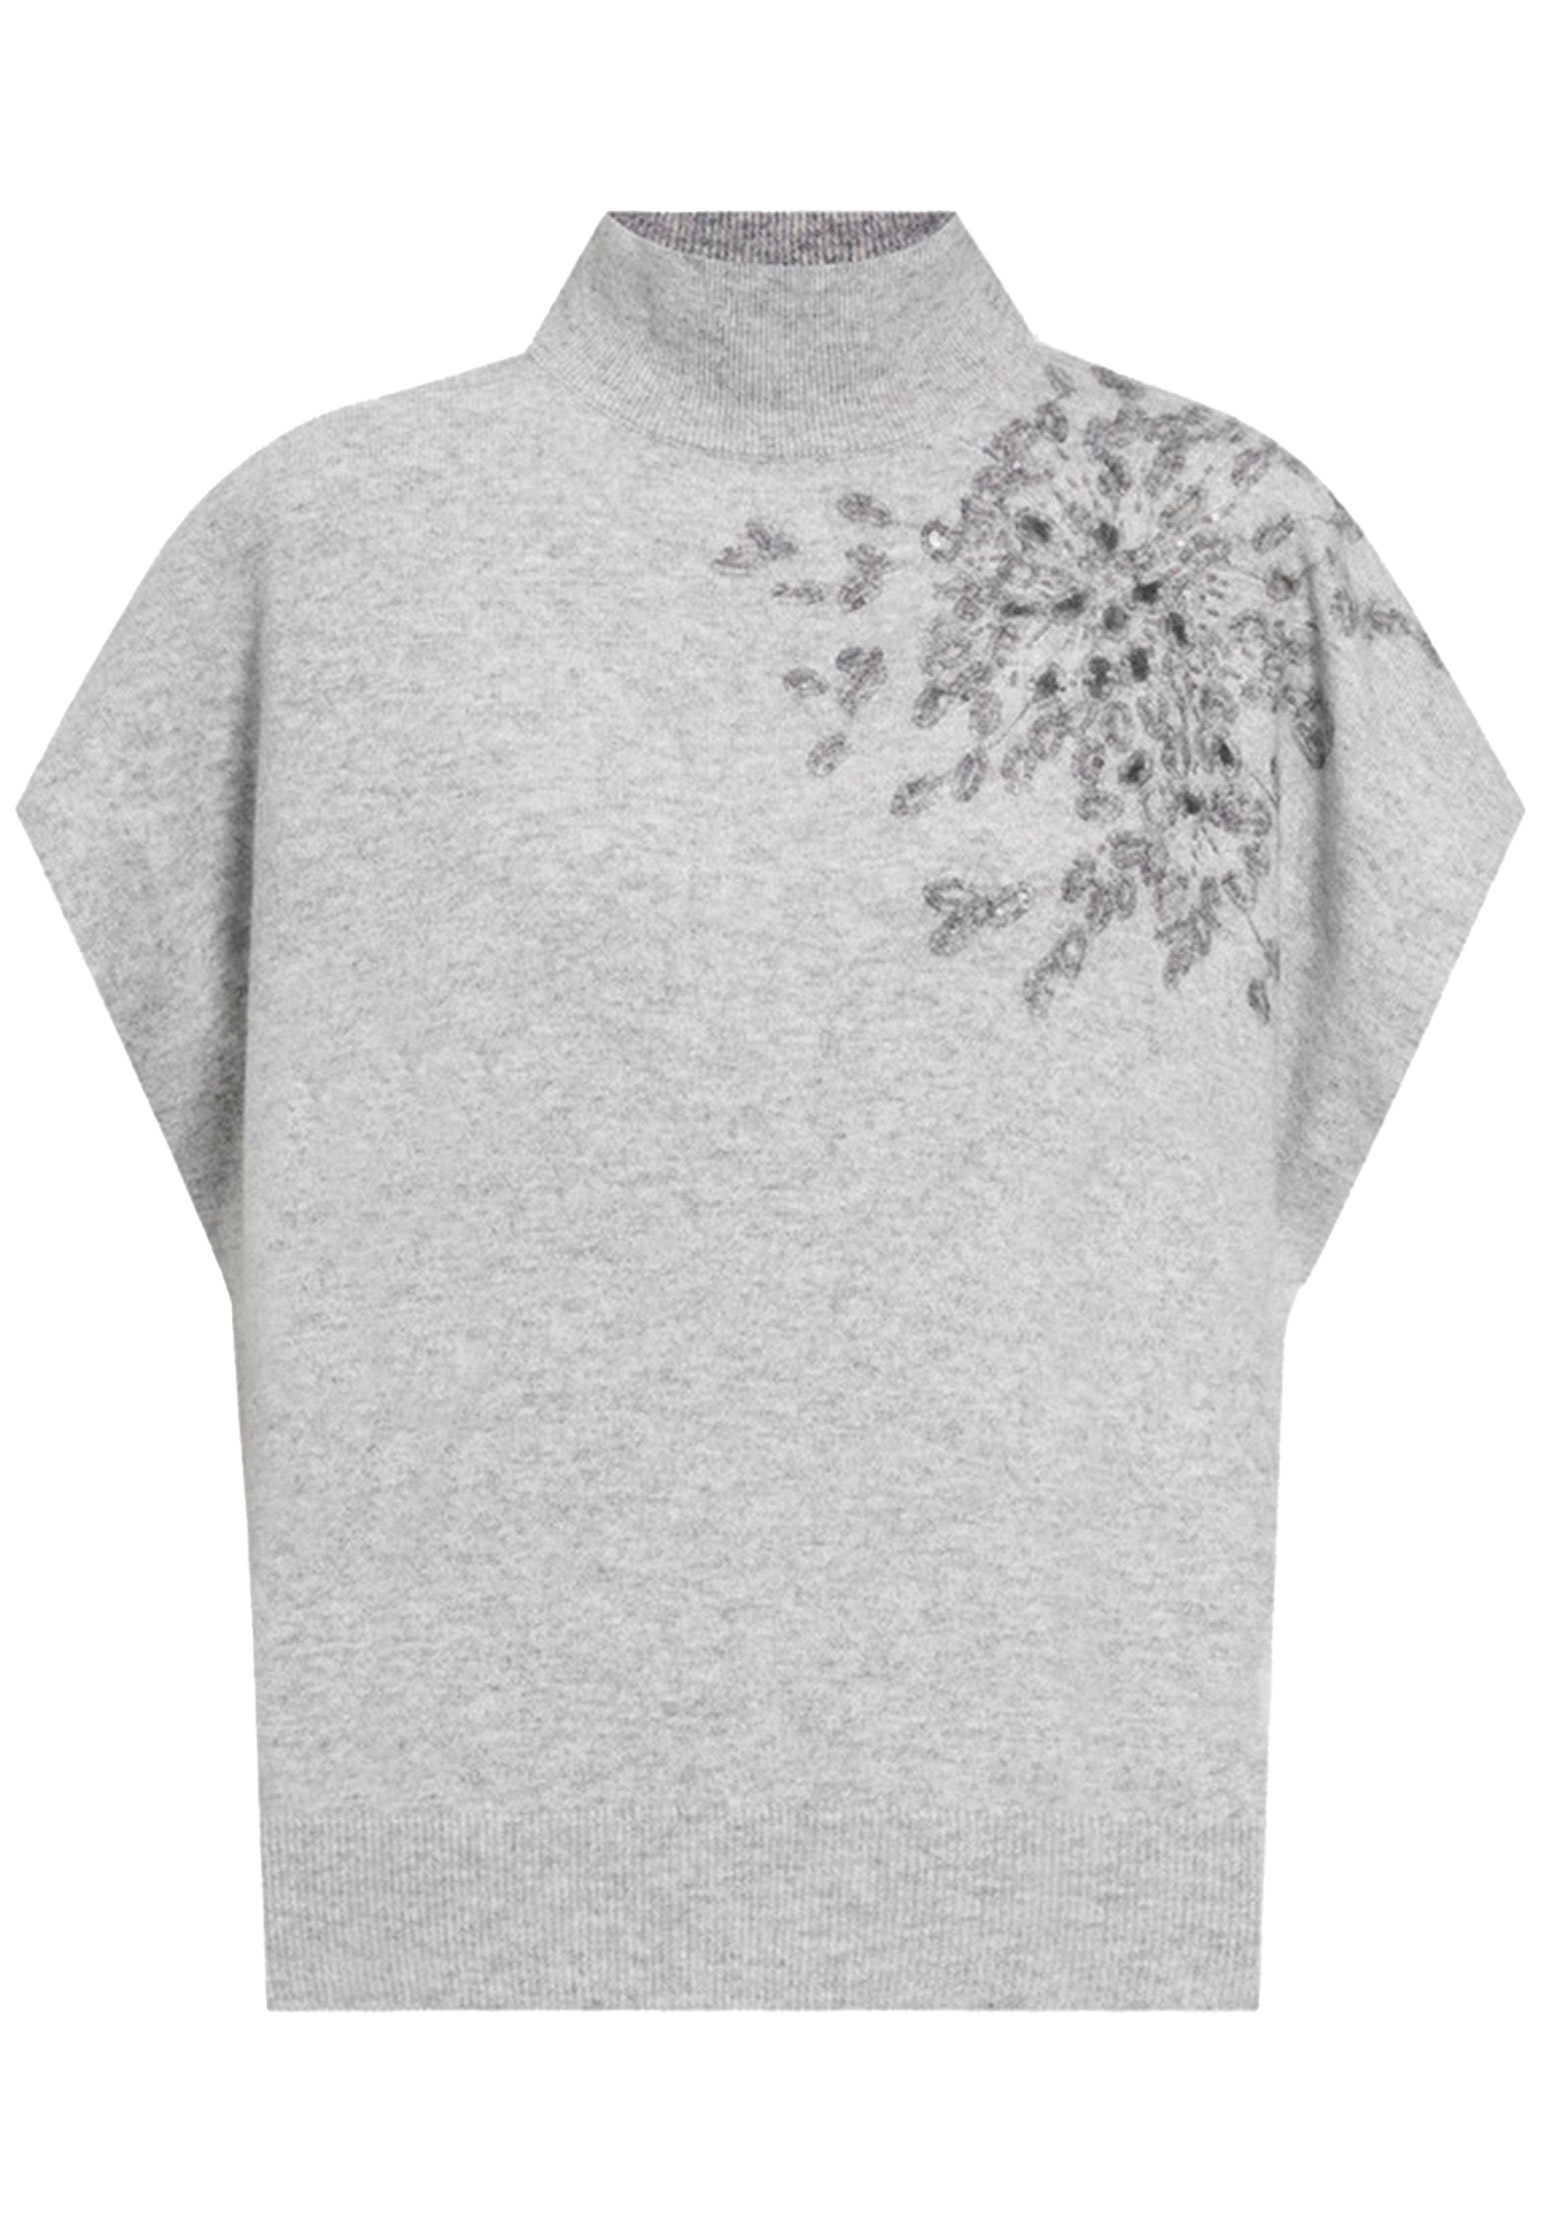 Sweater BRUNELLO CUCINELLI Color: grey (Code: 485) in online store Allure